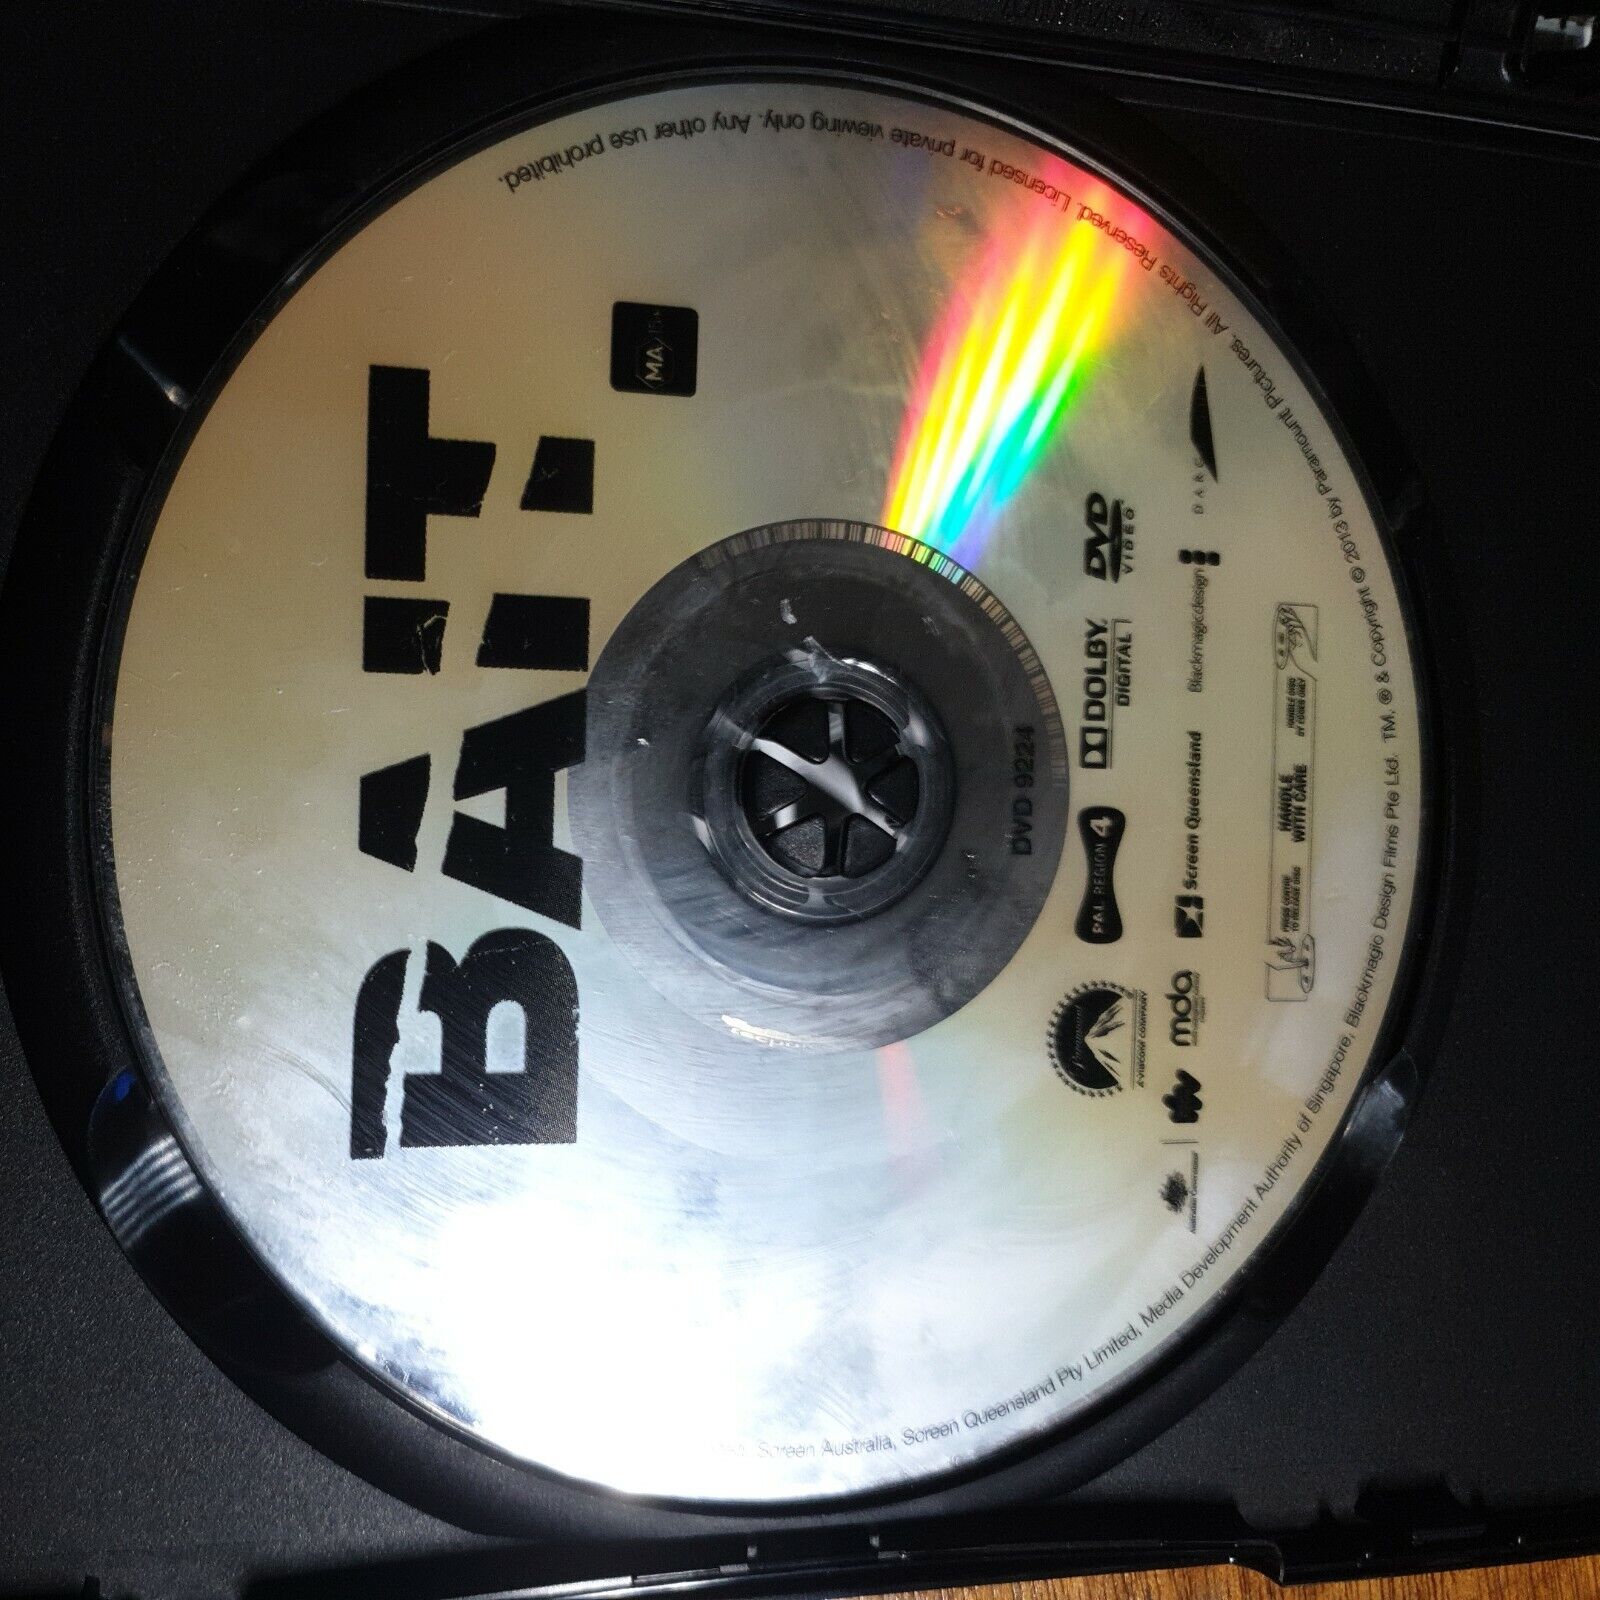 Bait (DVD, 2012) for sale online | eBay